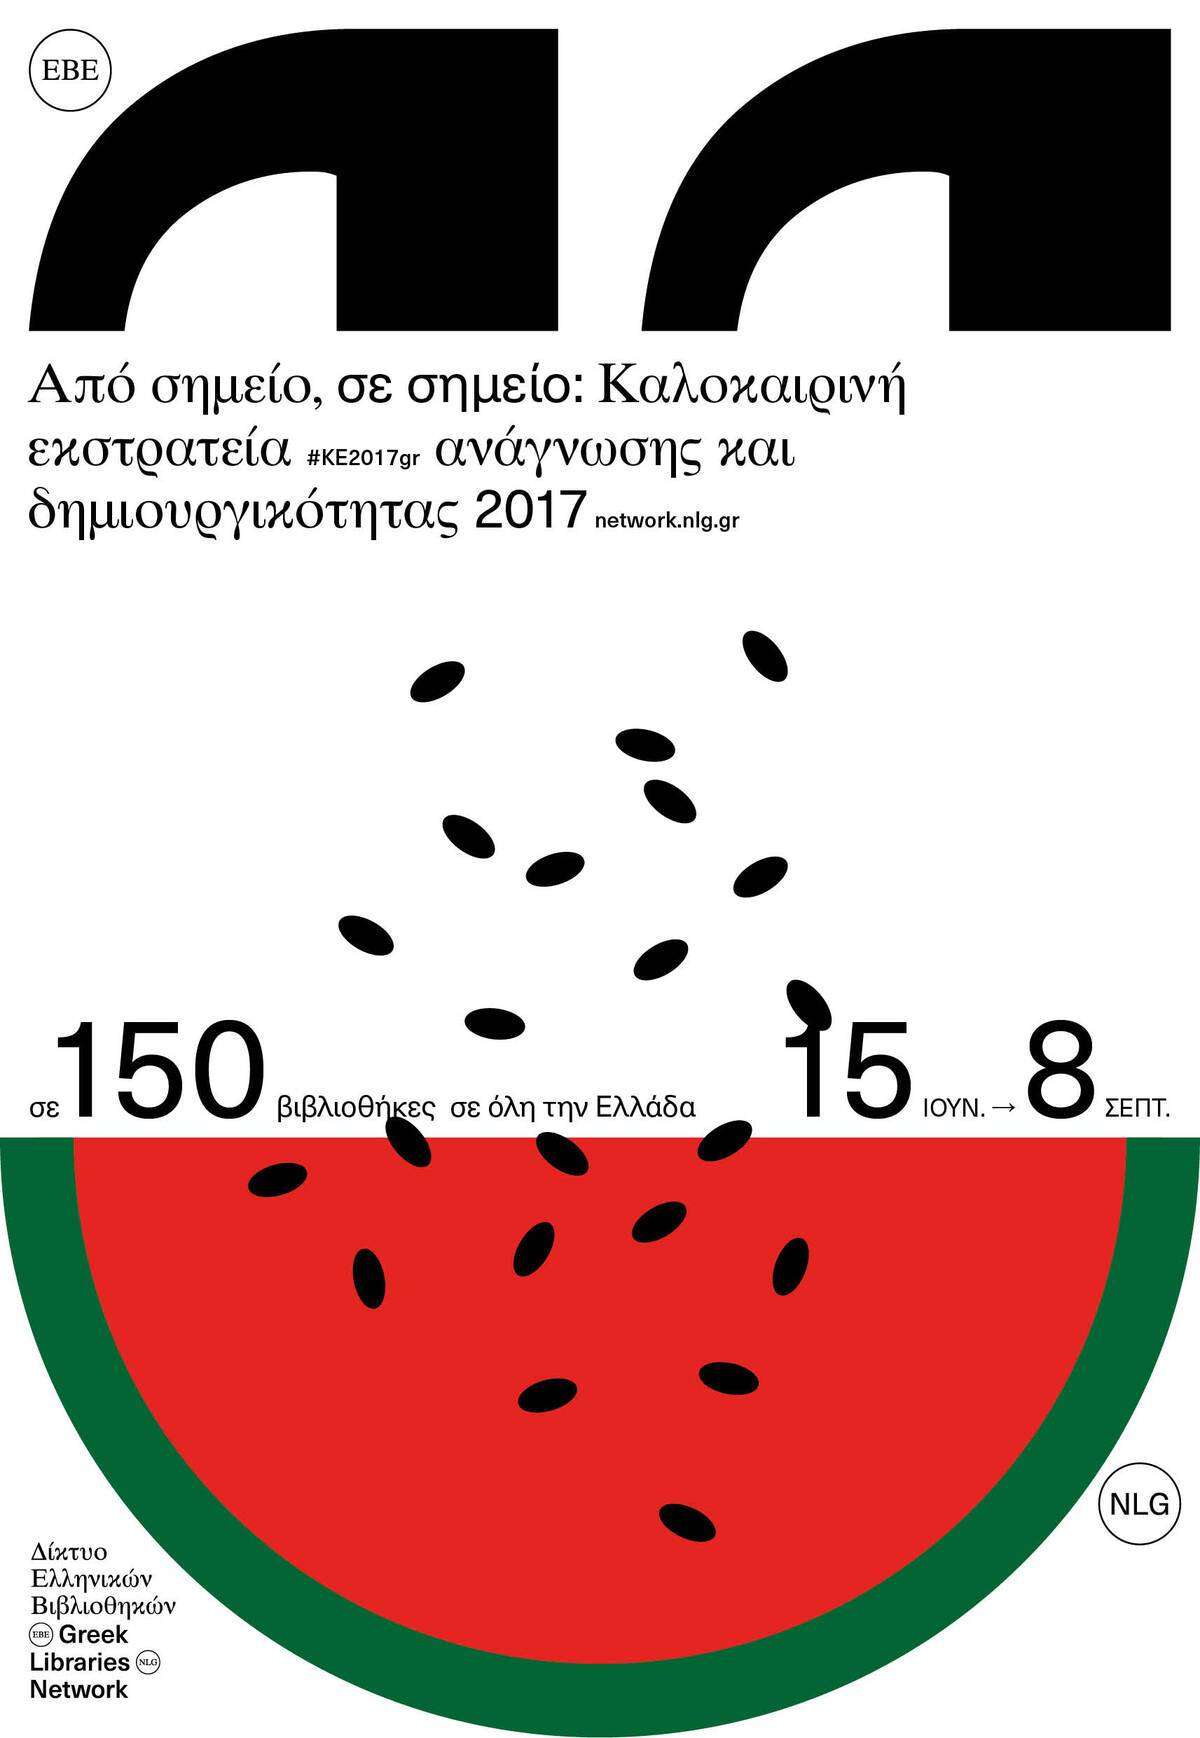 KE2017 poster